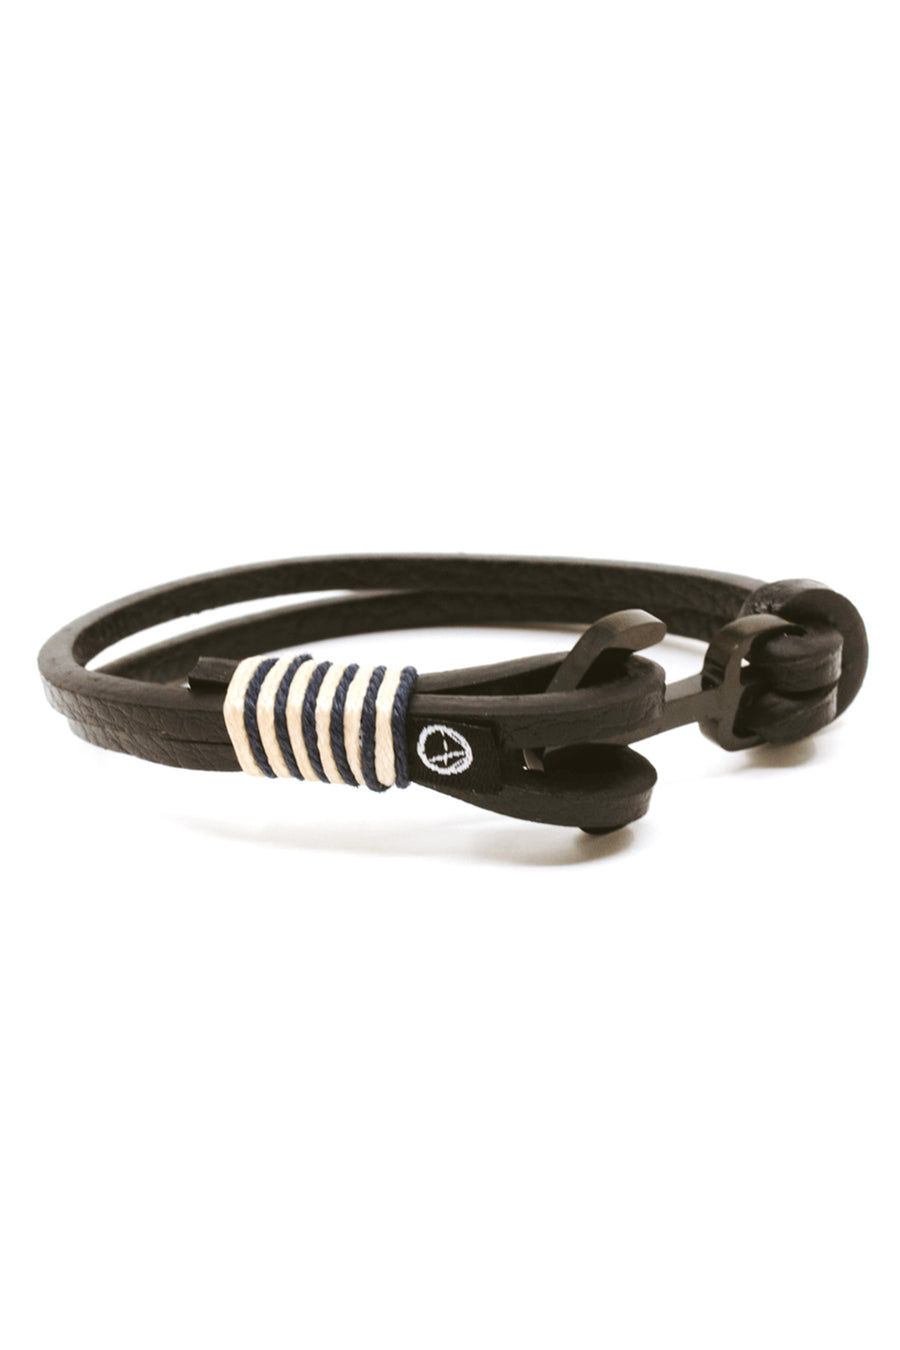 Anchor Leather Ocean Lab Bracelet